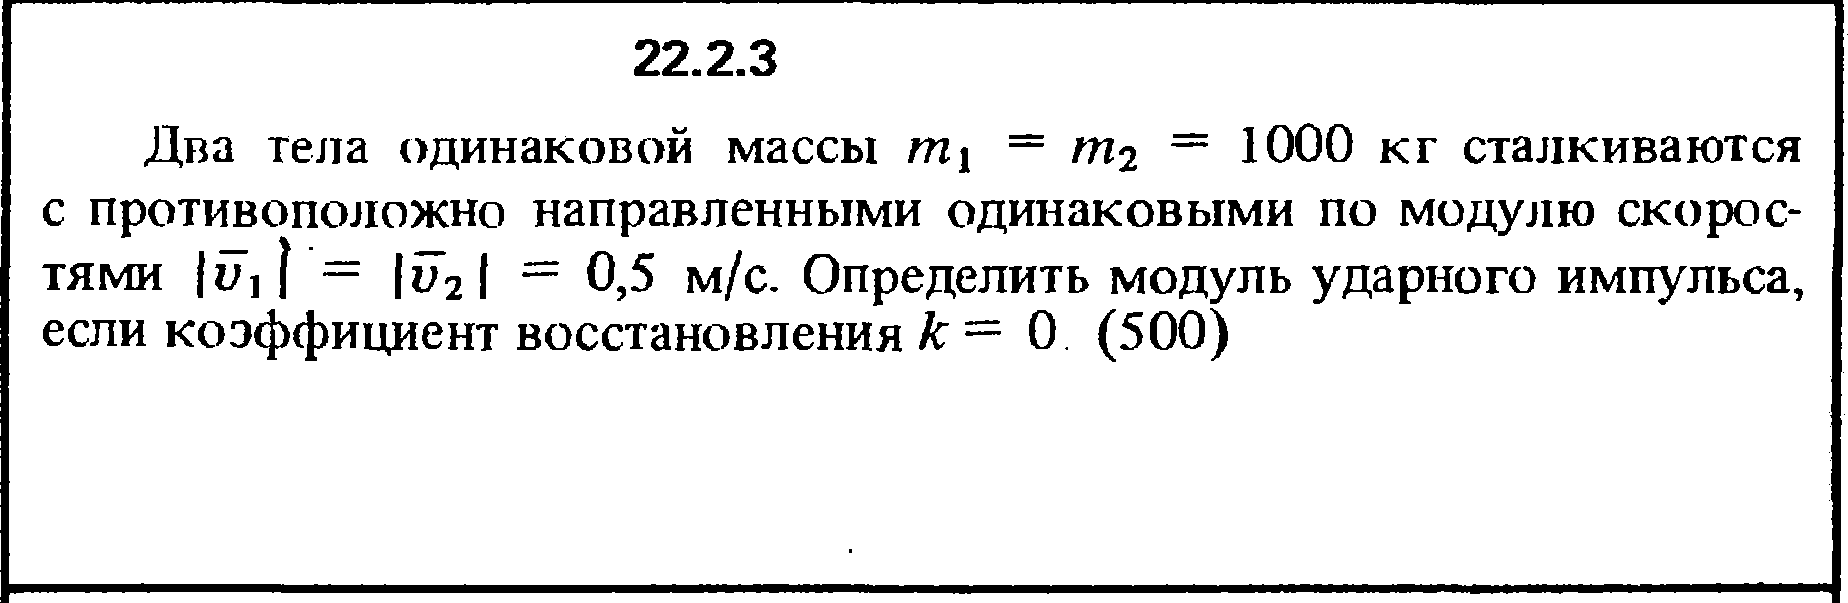 Решение 22.2.3 из сборника (решебника) Кепе О.Е. 1989